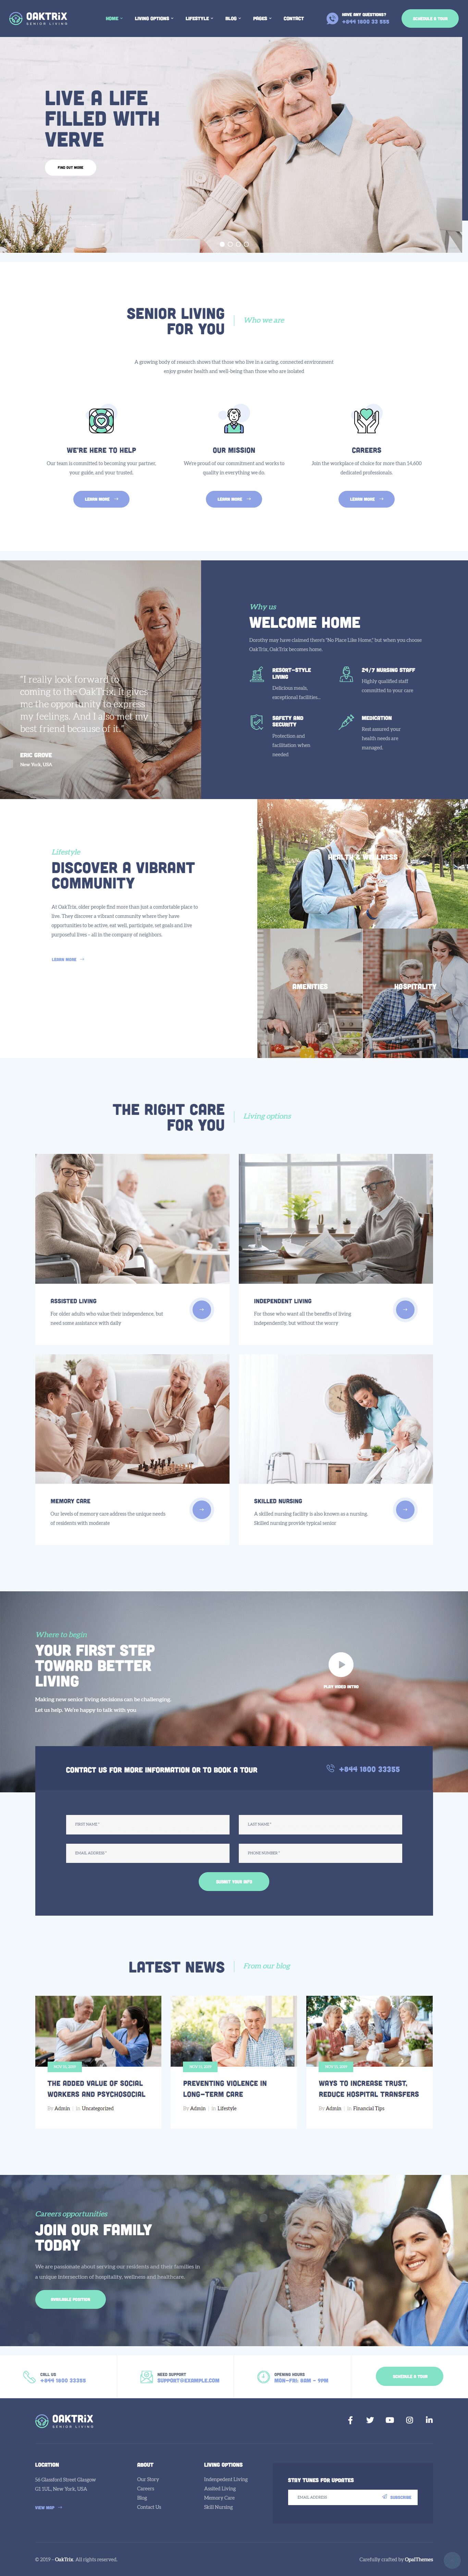 Home Healthcare Service Website Design And Development